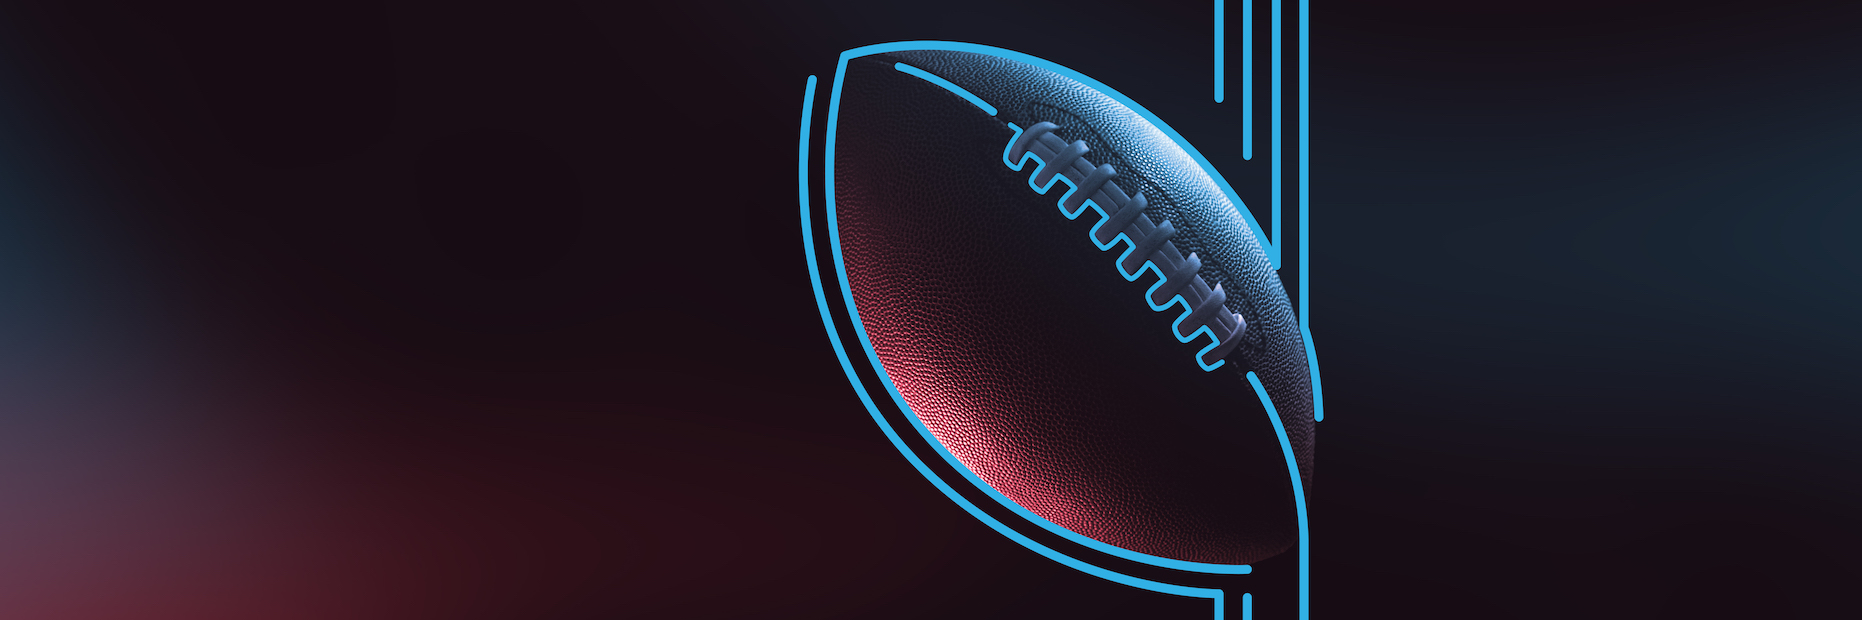 Brand Bowl 2021 Ad Tracker: M&M’S